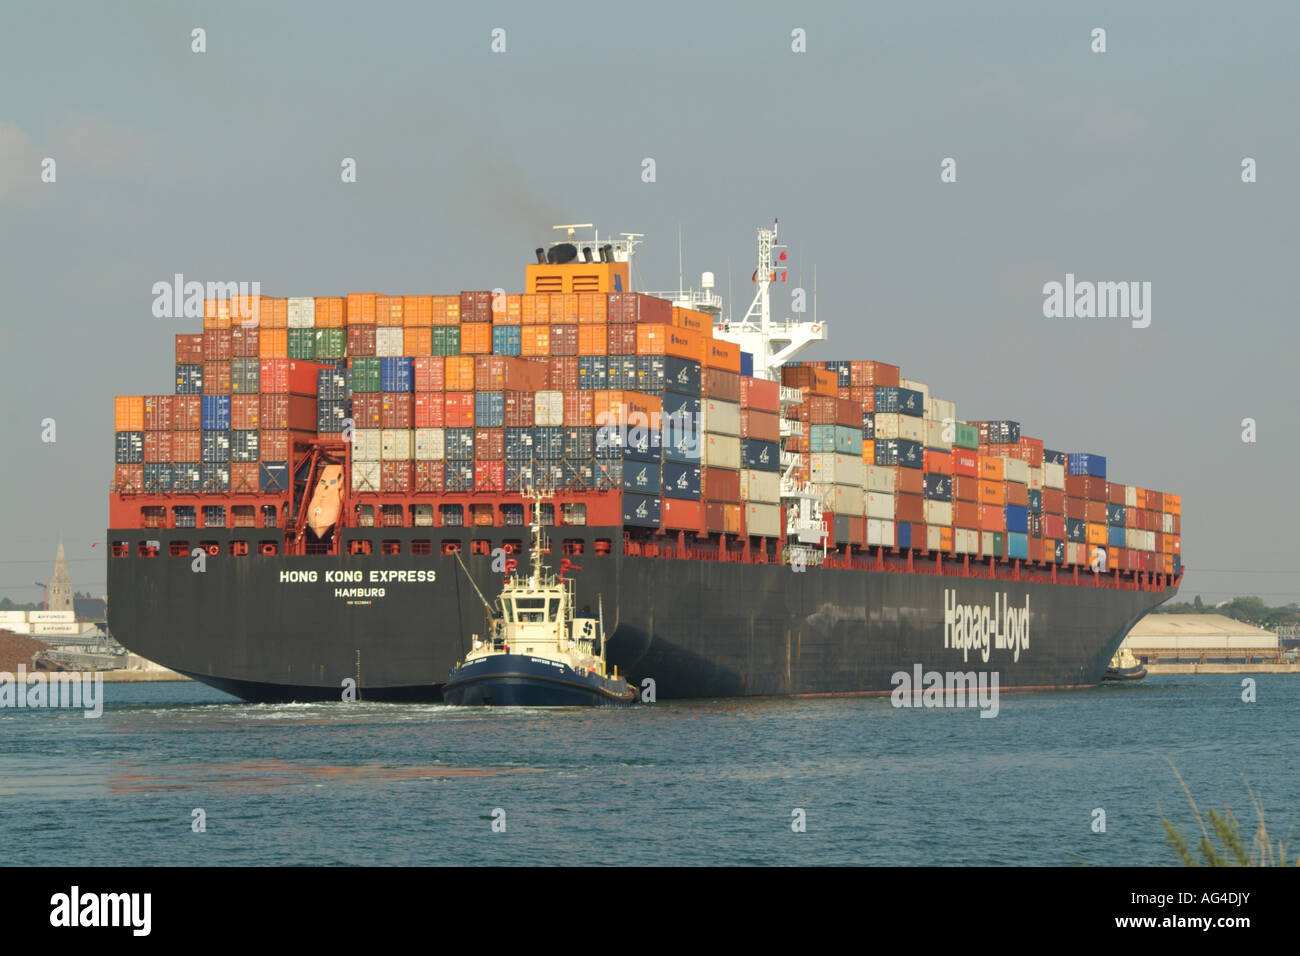 Southampton Container Terminal Tug Svitzer Sarah pulling Hong Kong Express a container ship operated by Hapag Lloyd Stock Photo